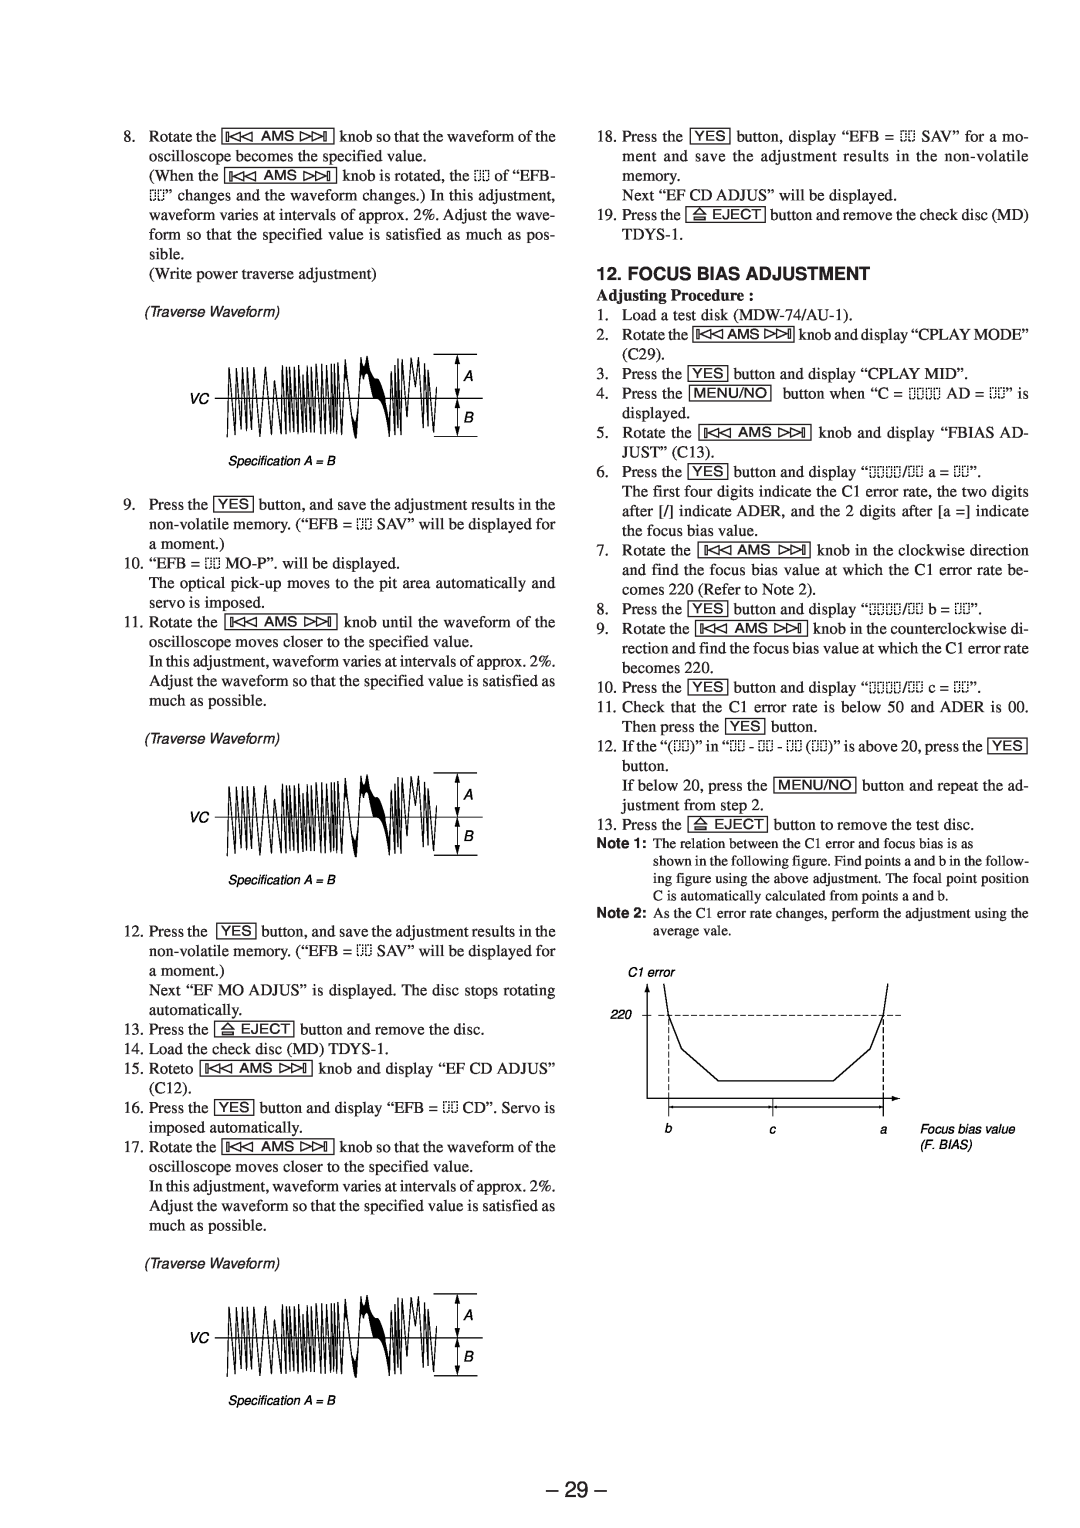 Sony MDS-JB920 service manual 29, Focus Bias Adjustment 